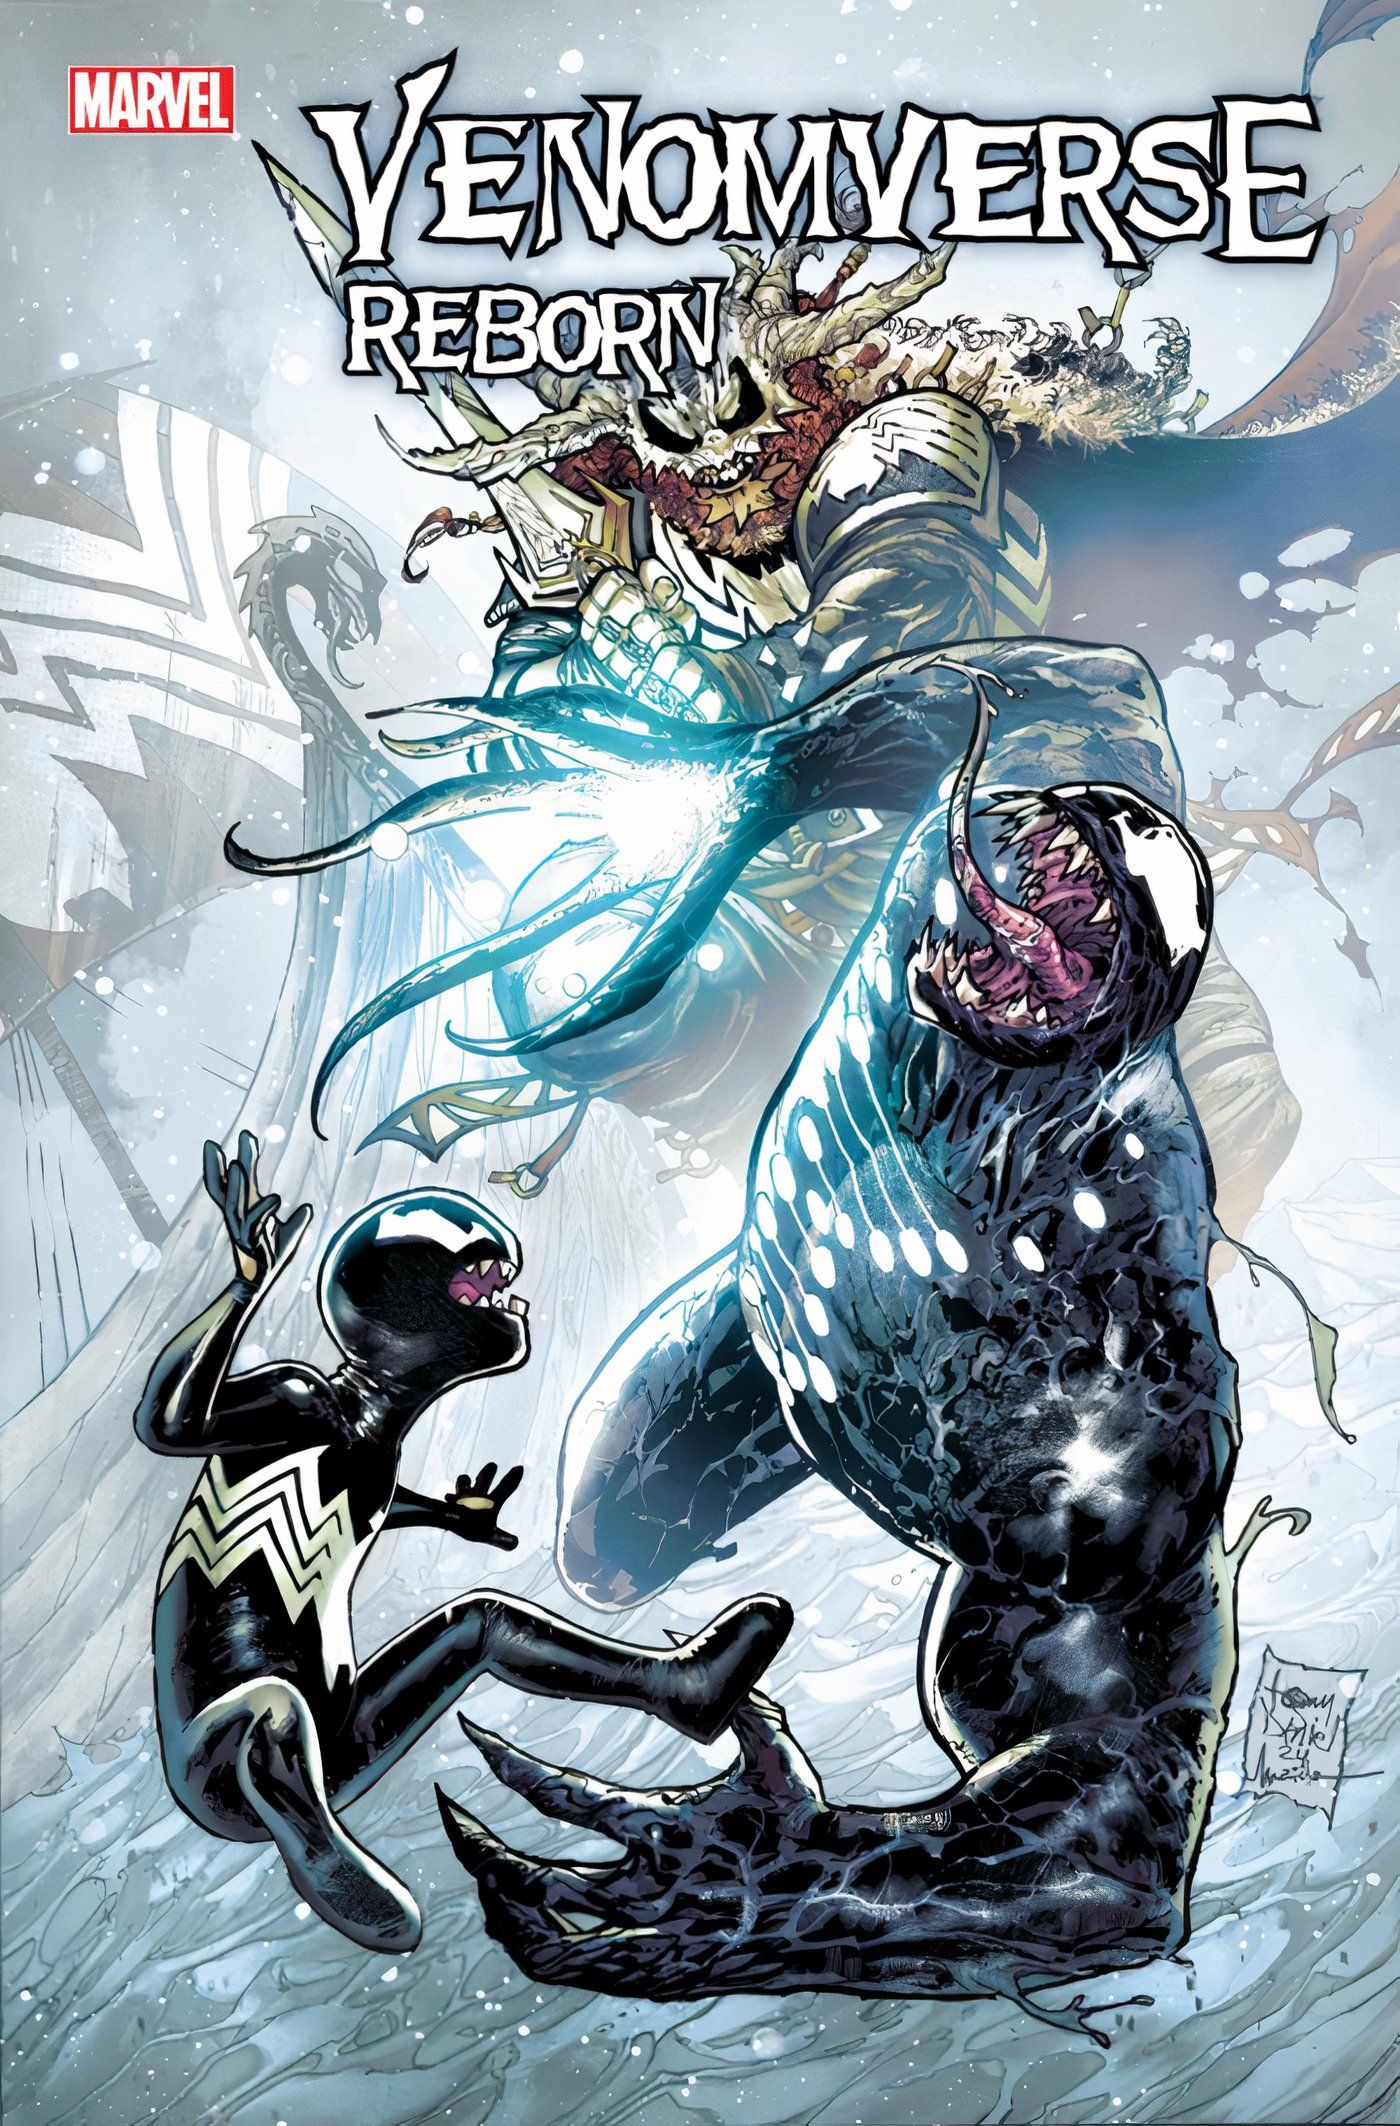 Venom from Venom: The End on the cover of Venomverse Reborn #2.